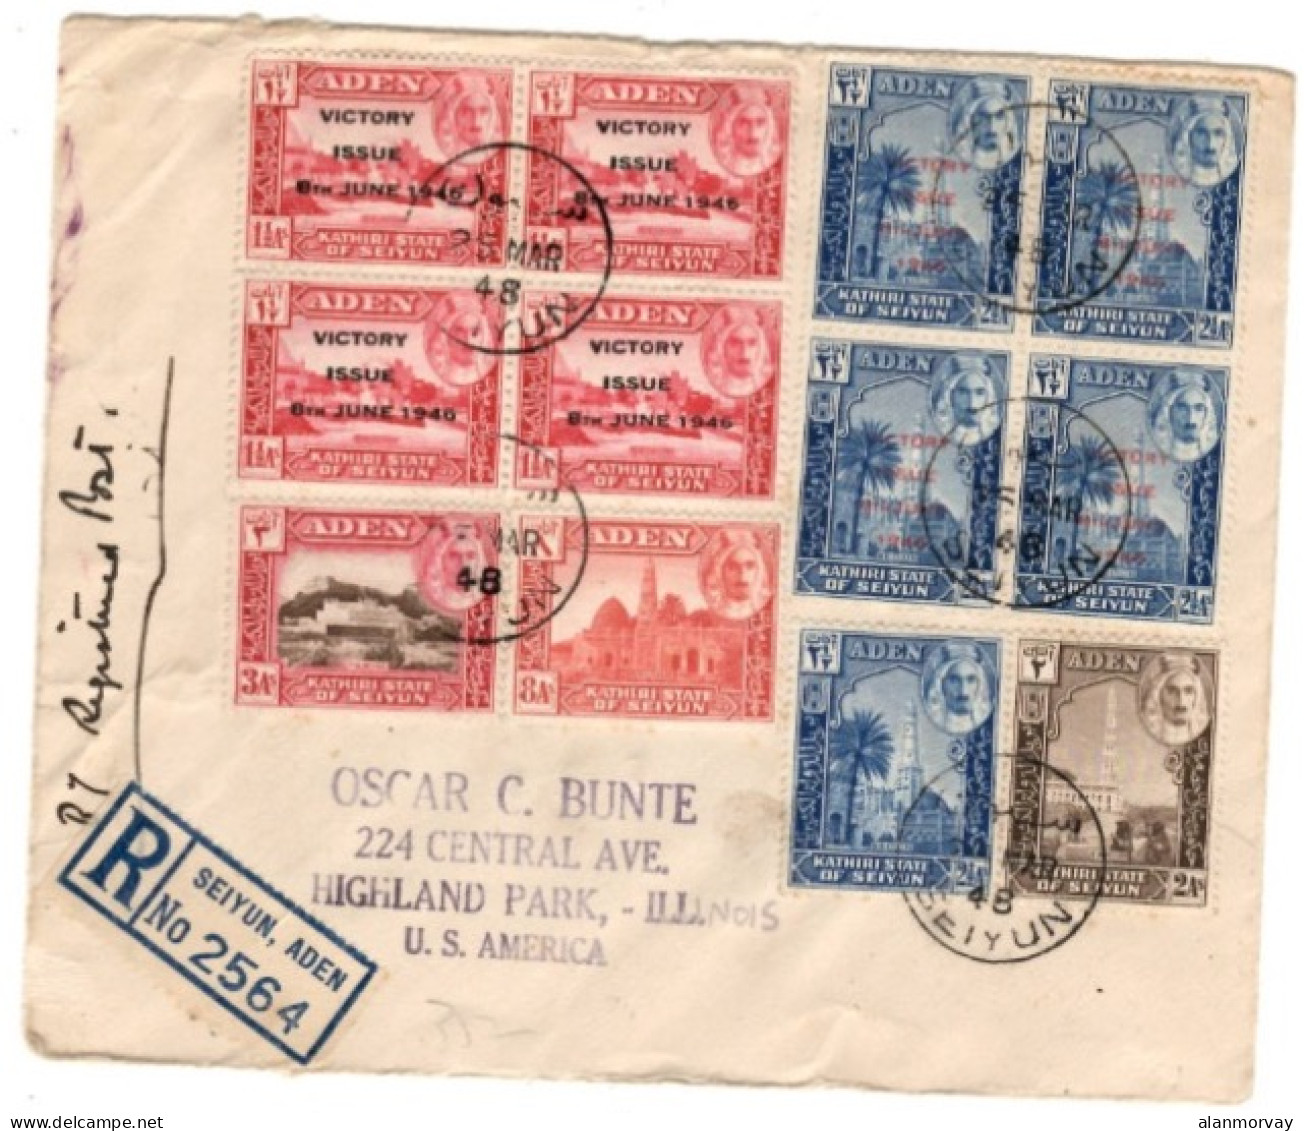 Aden - Aden Kathiri State Of Seiyun March 25, 1948 Registered Cover To USA - Aden (1854-1963)